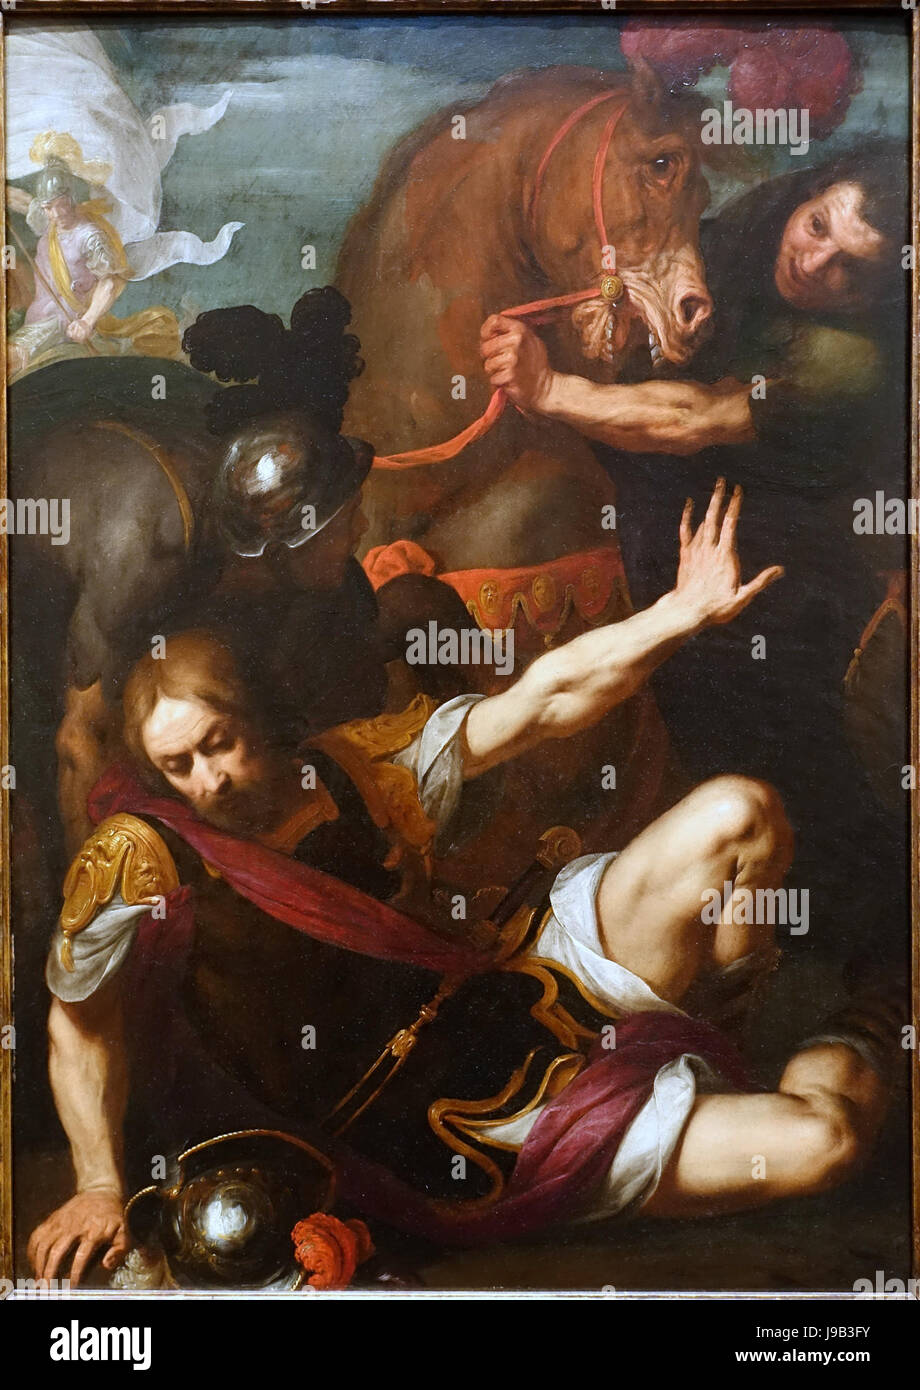 The Conversion of Saint Paul, by Daniele Crespi, Milan, c. 1621, oil on wood panel   Blanton Museum of Art   Austin, Texas   DSC07965 Stock Photo